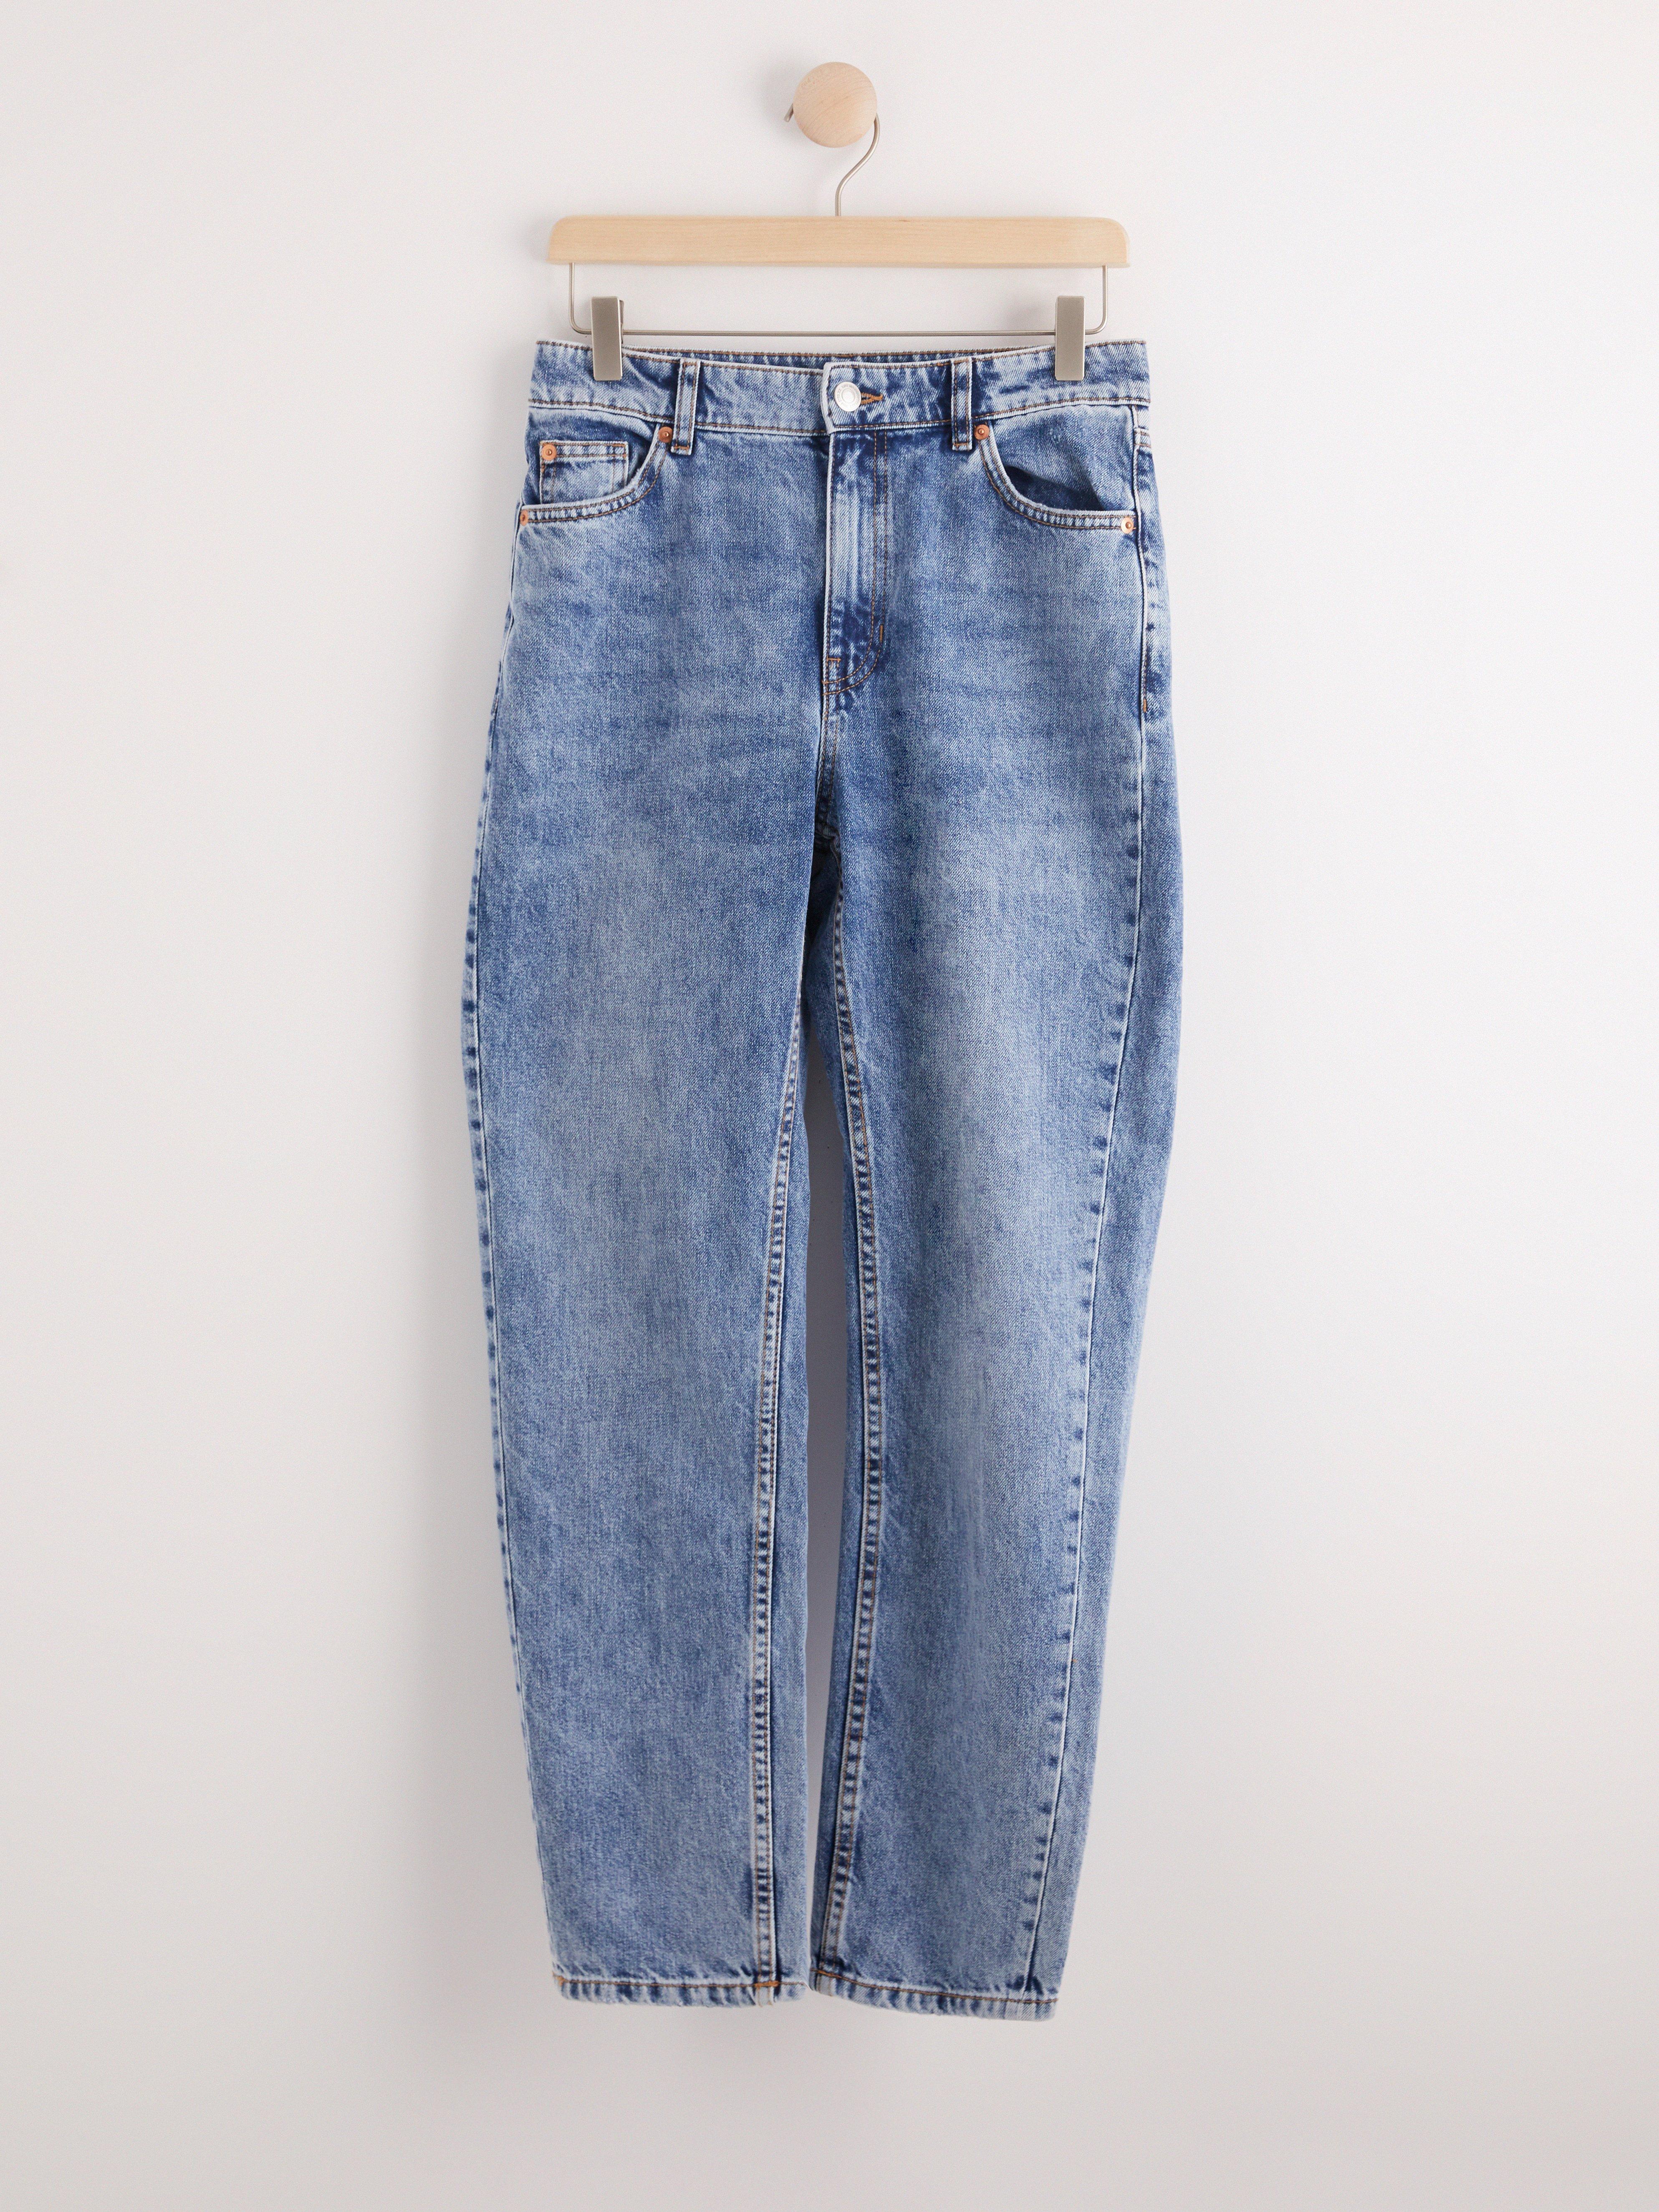 betty blue jeans